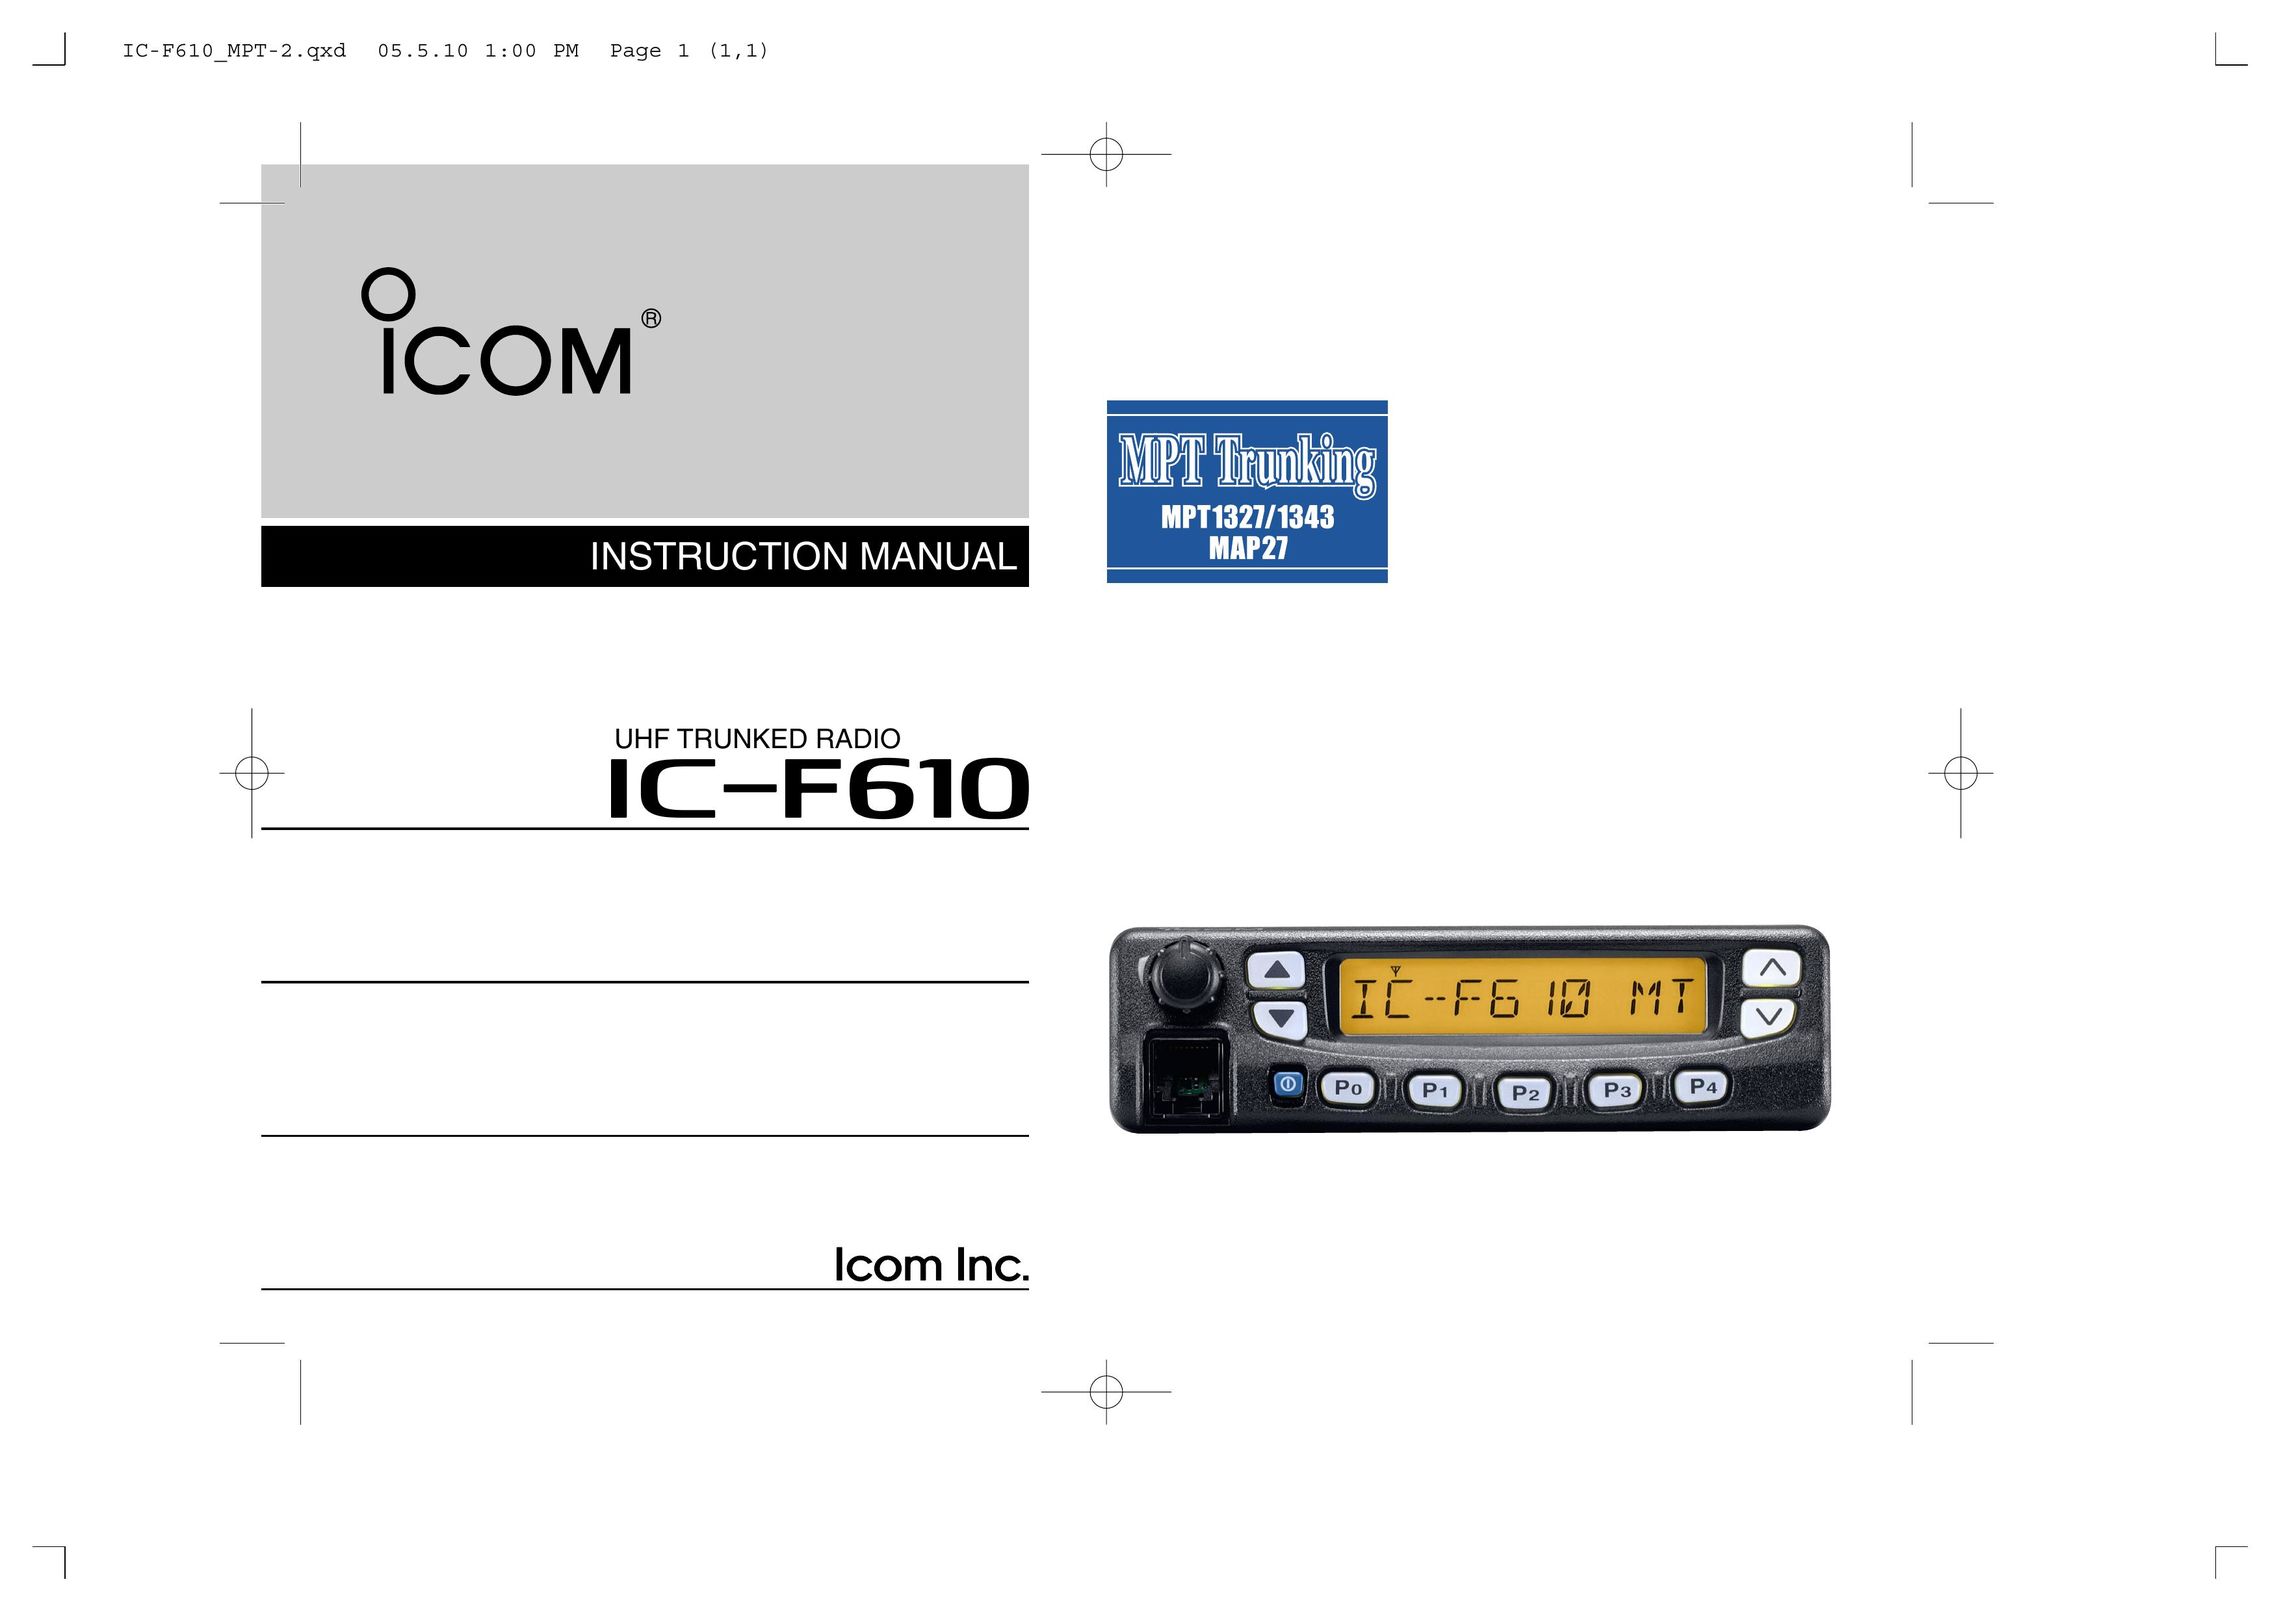 Icom IC-F610 Two-Way Radio User Manual